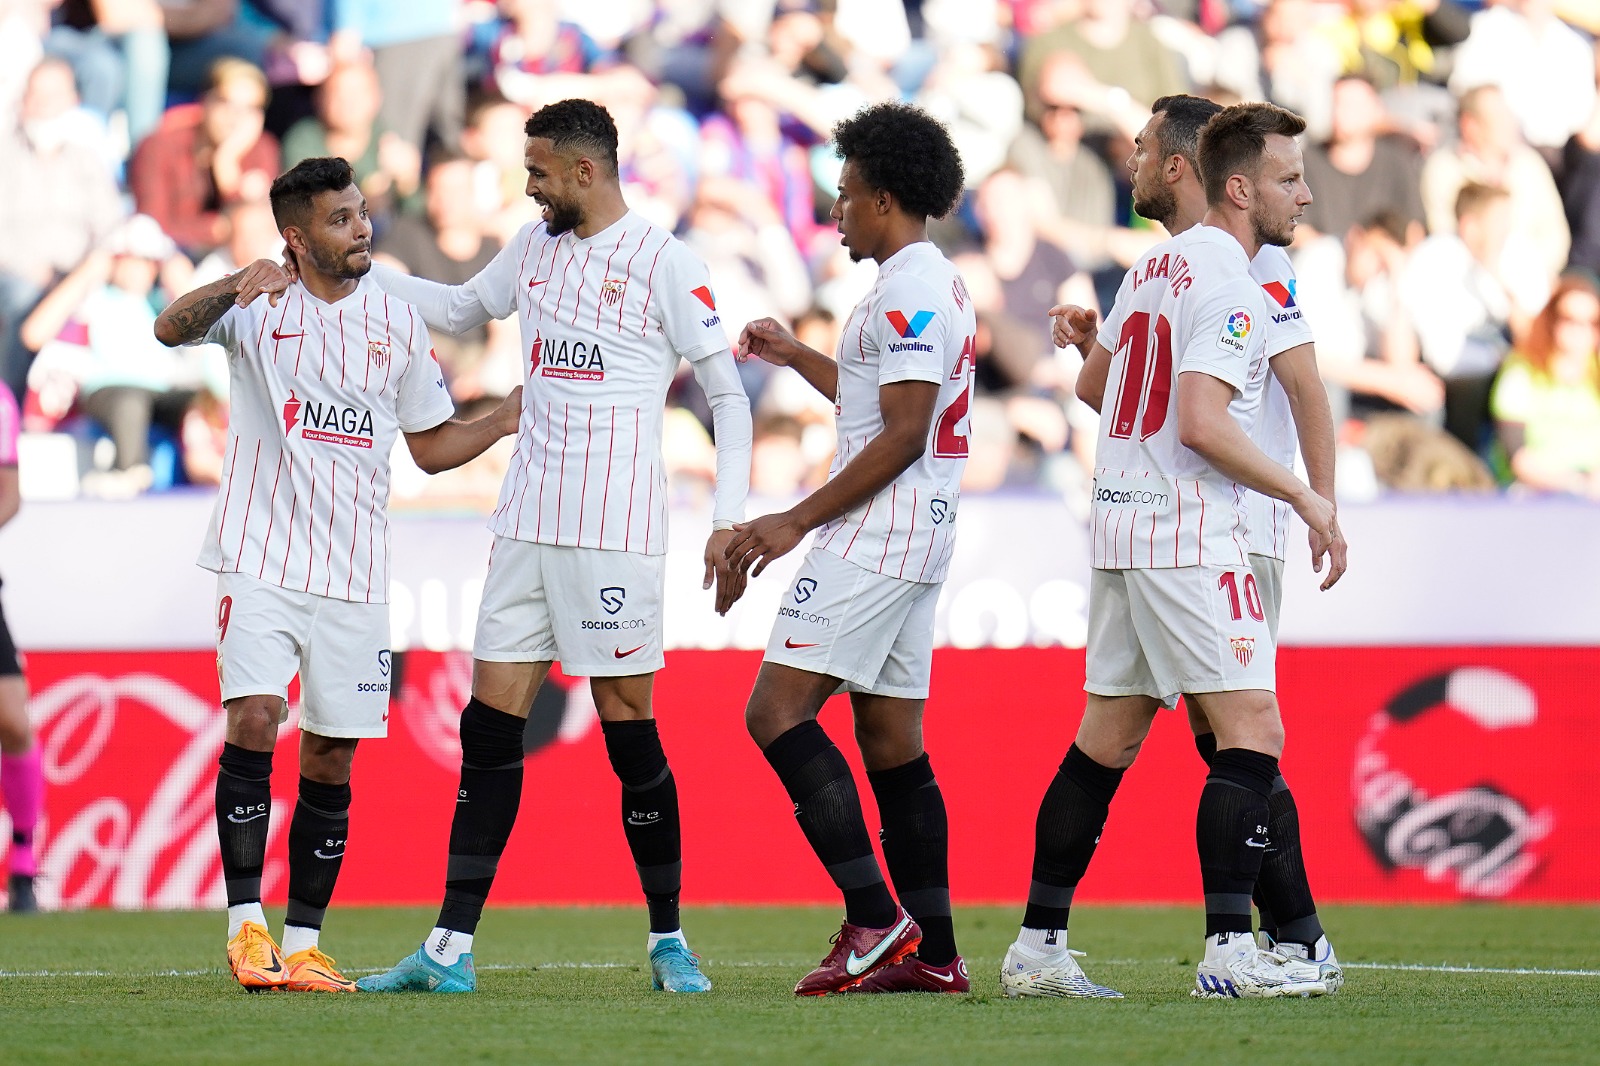 Jugadores del Sevilla FC celebrando un gol